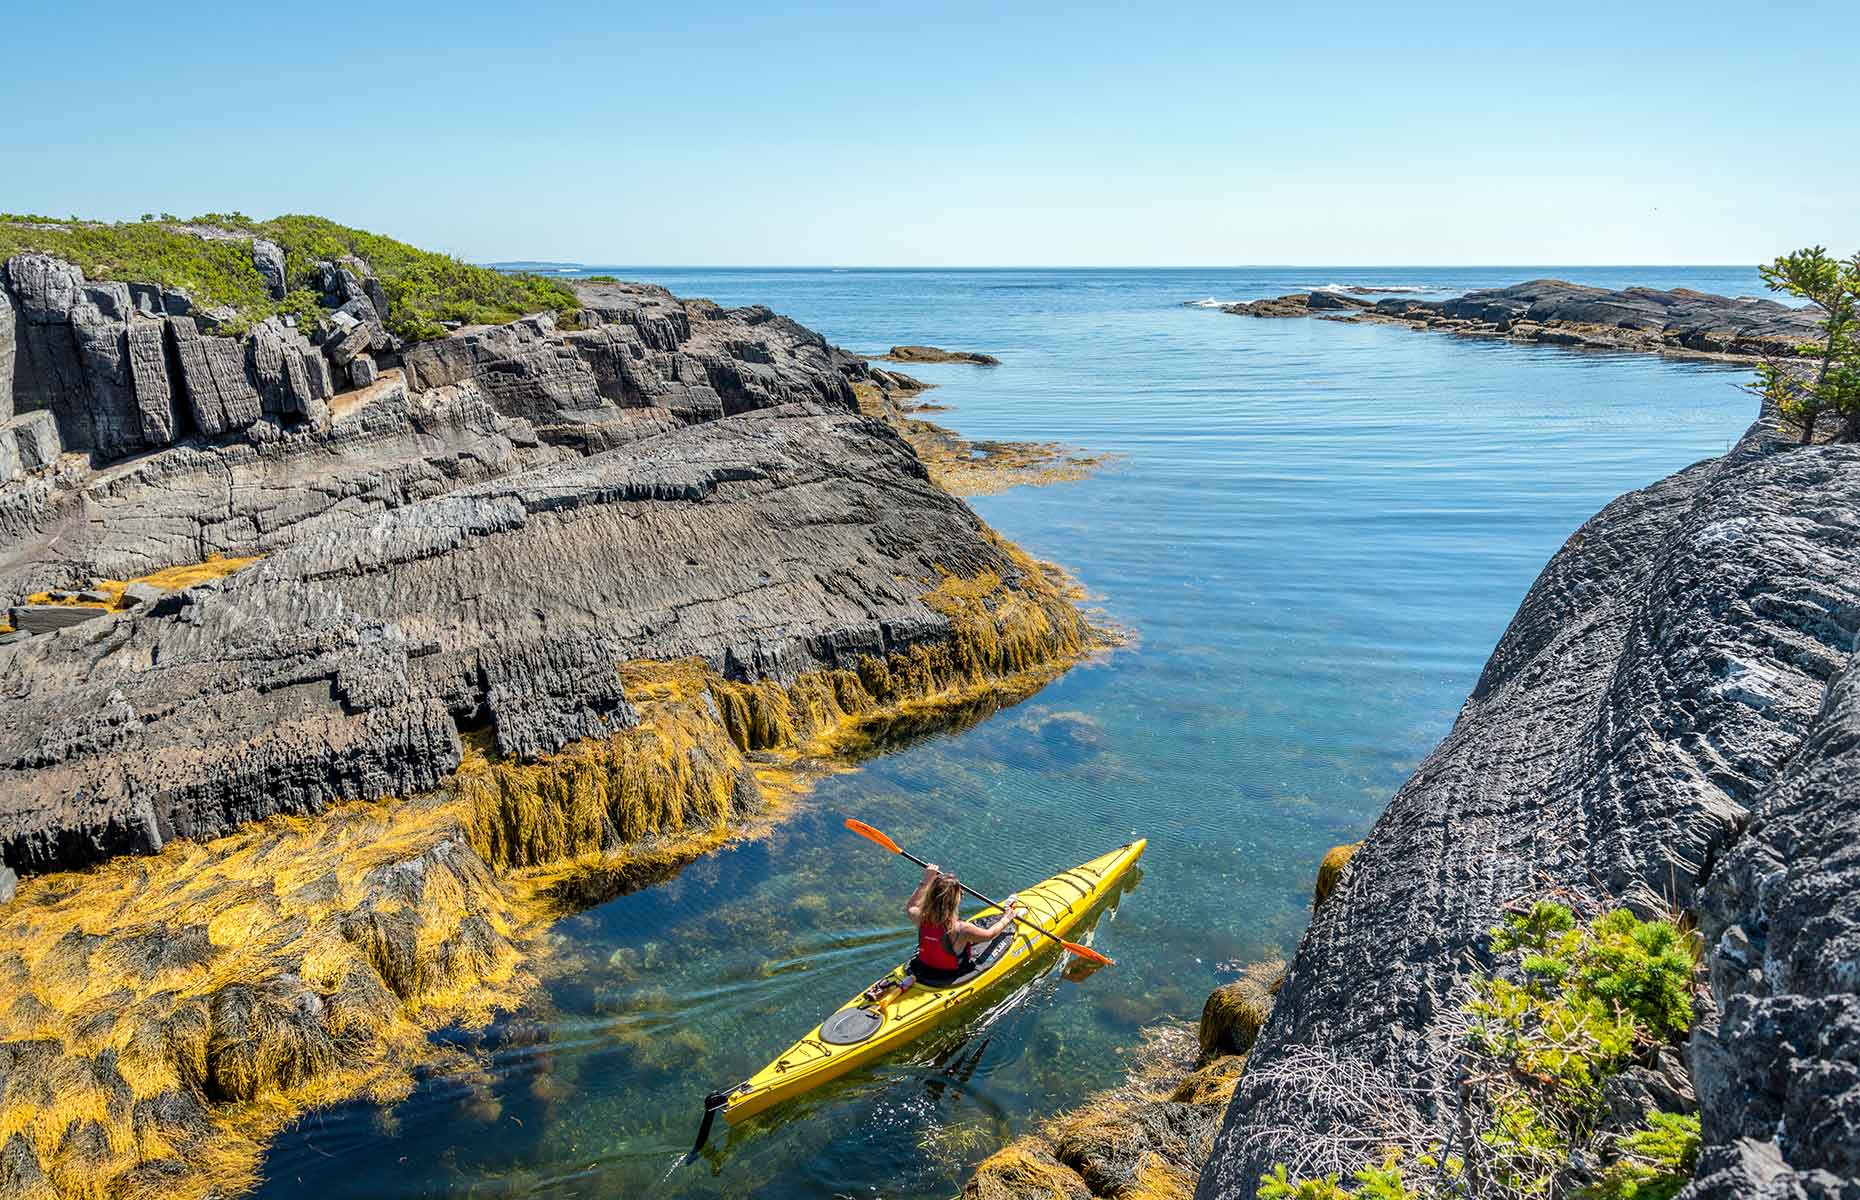 Kayaking around the islands near Blue Rocks, Nova Scotia